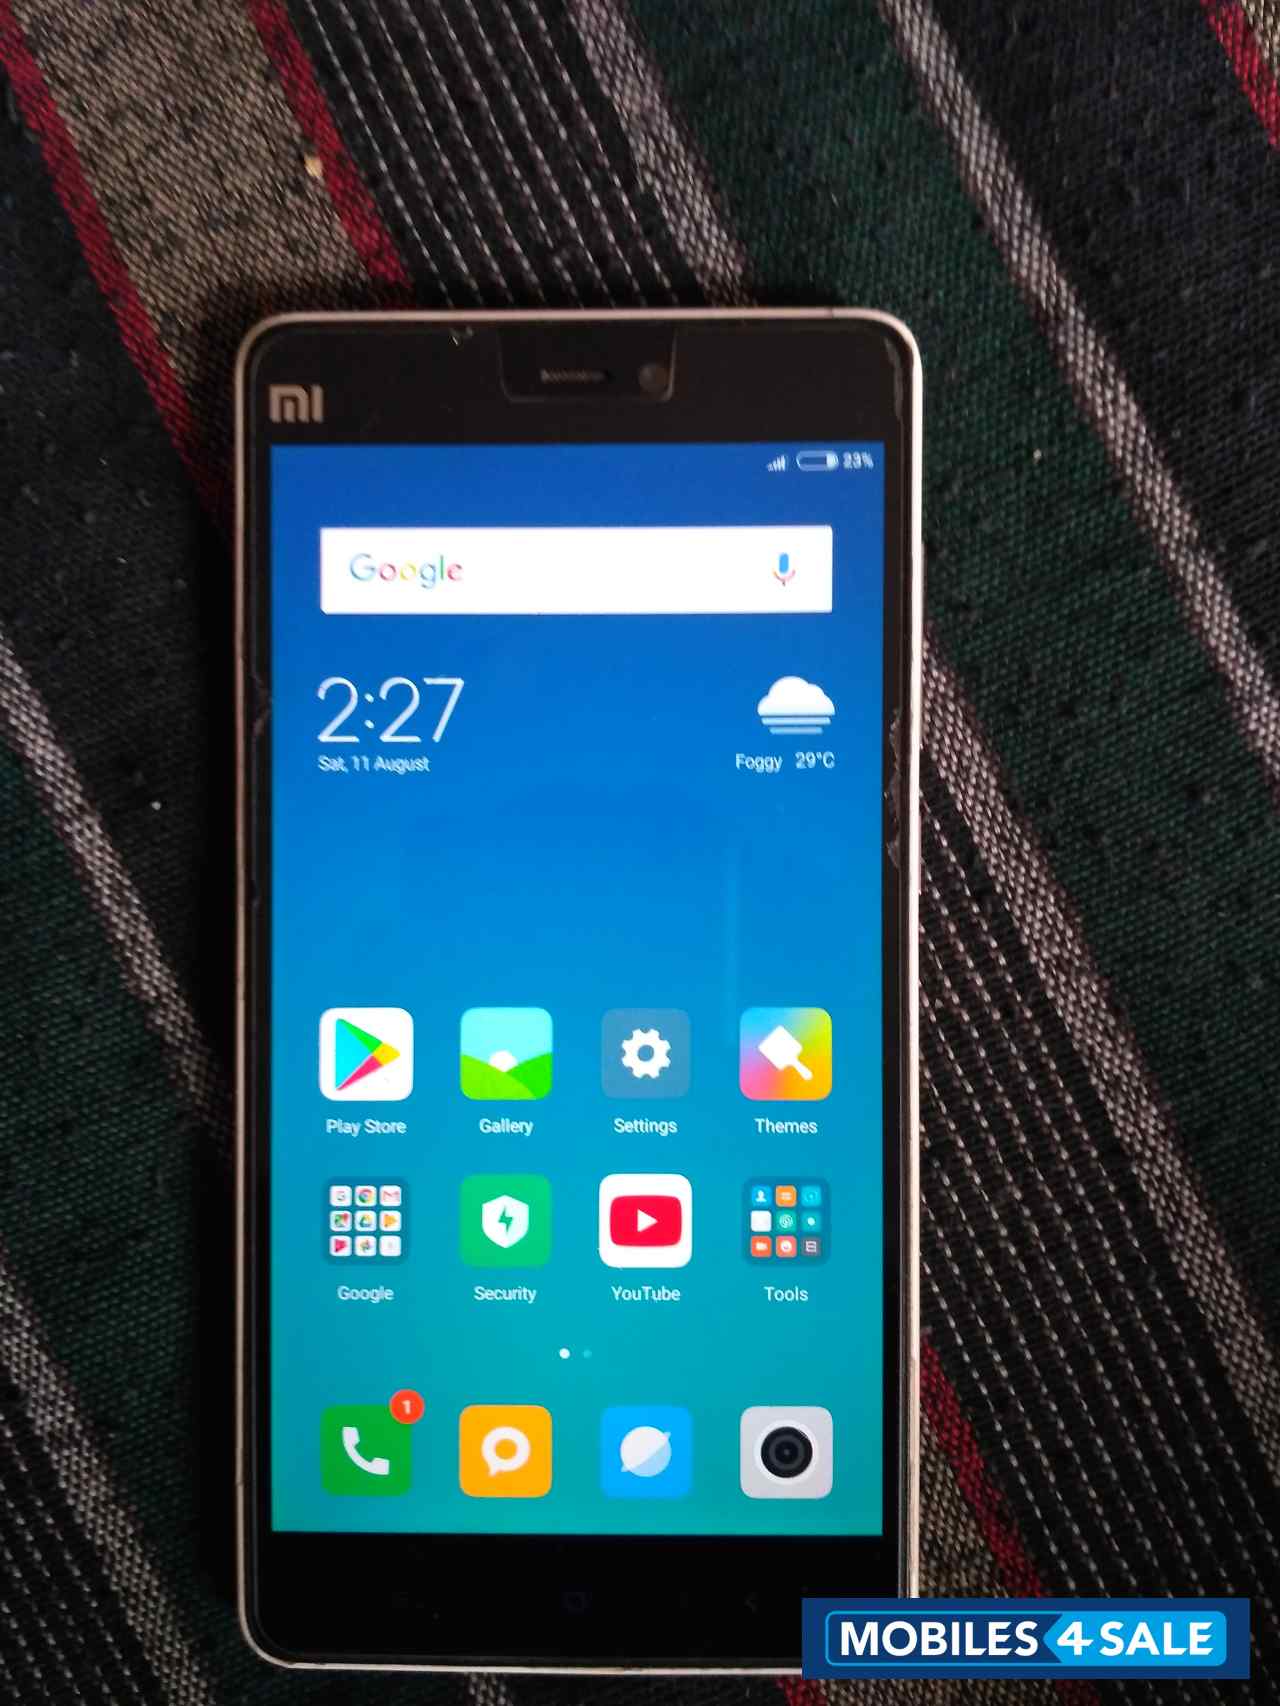 Xiaomi  Mi4i